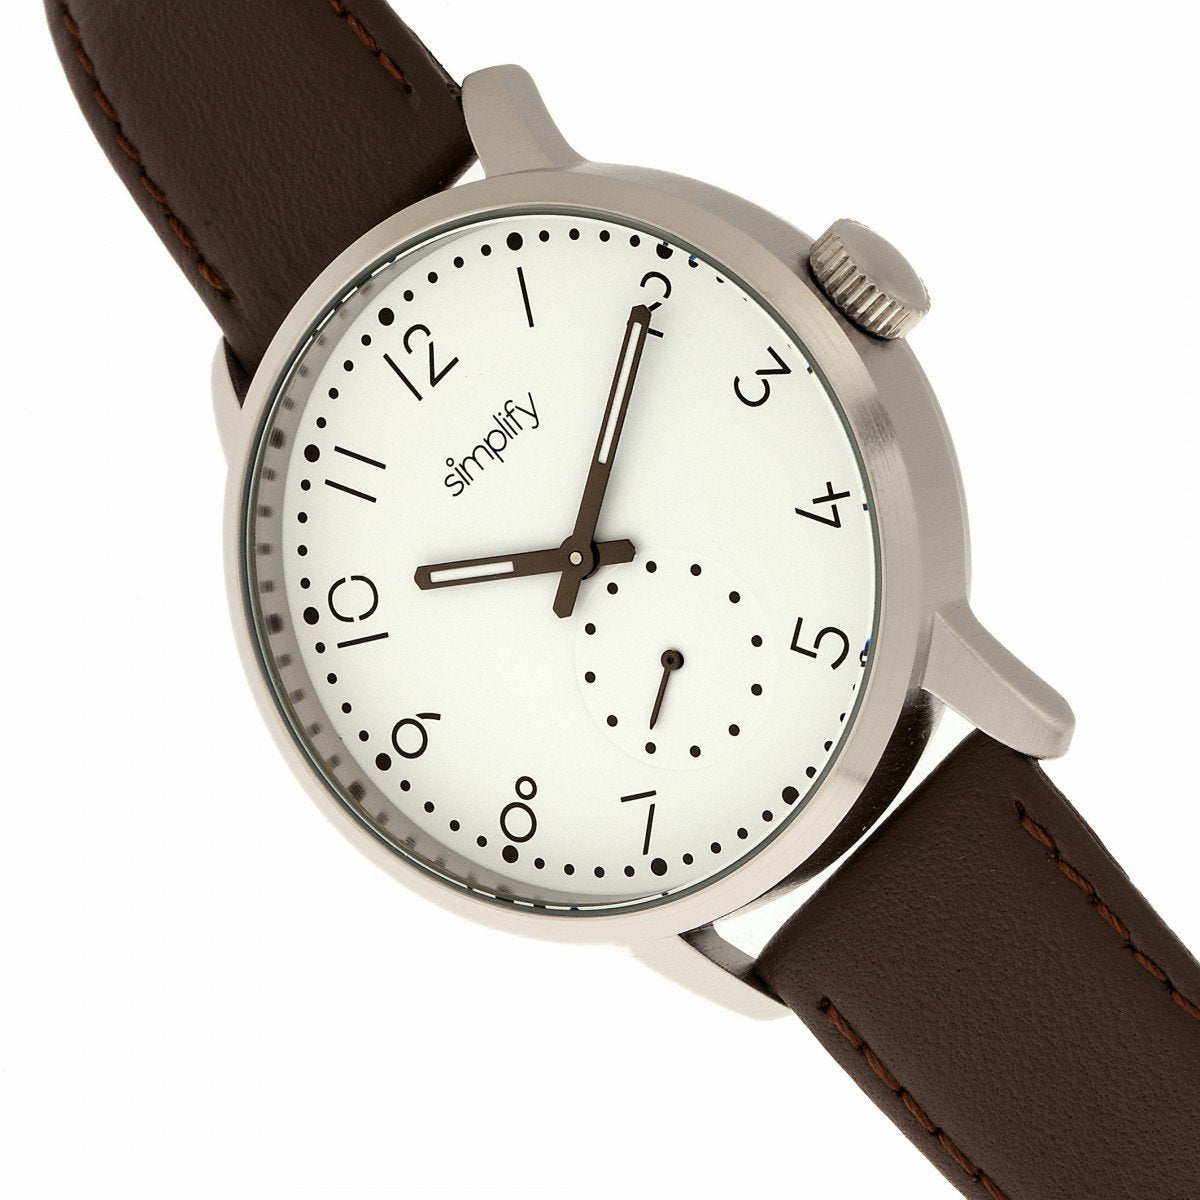 Simplify The 3400 Leather-Band Watch - Silver/Dark Brown - SIM3401